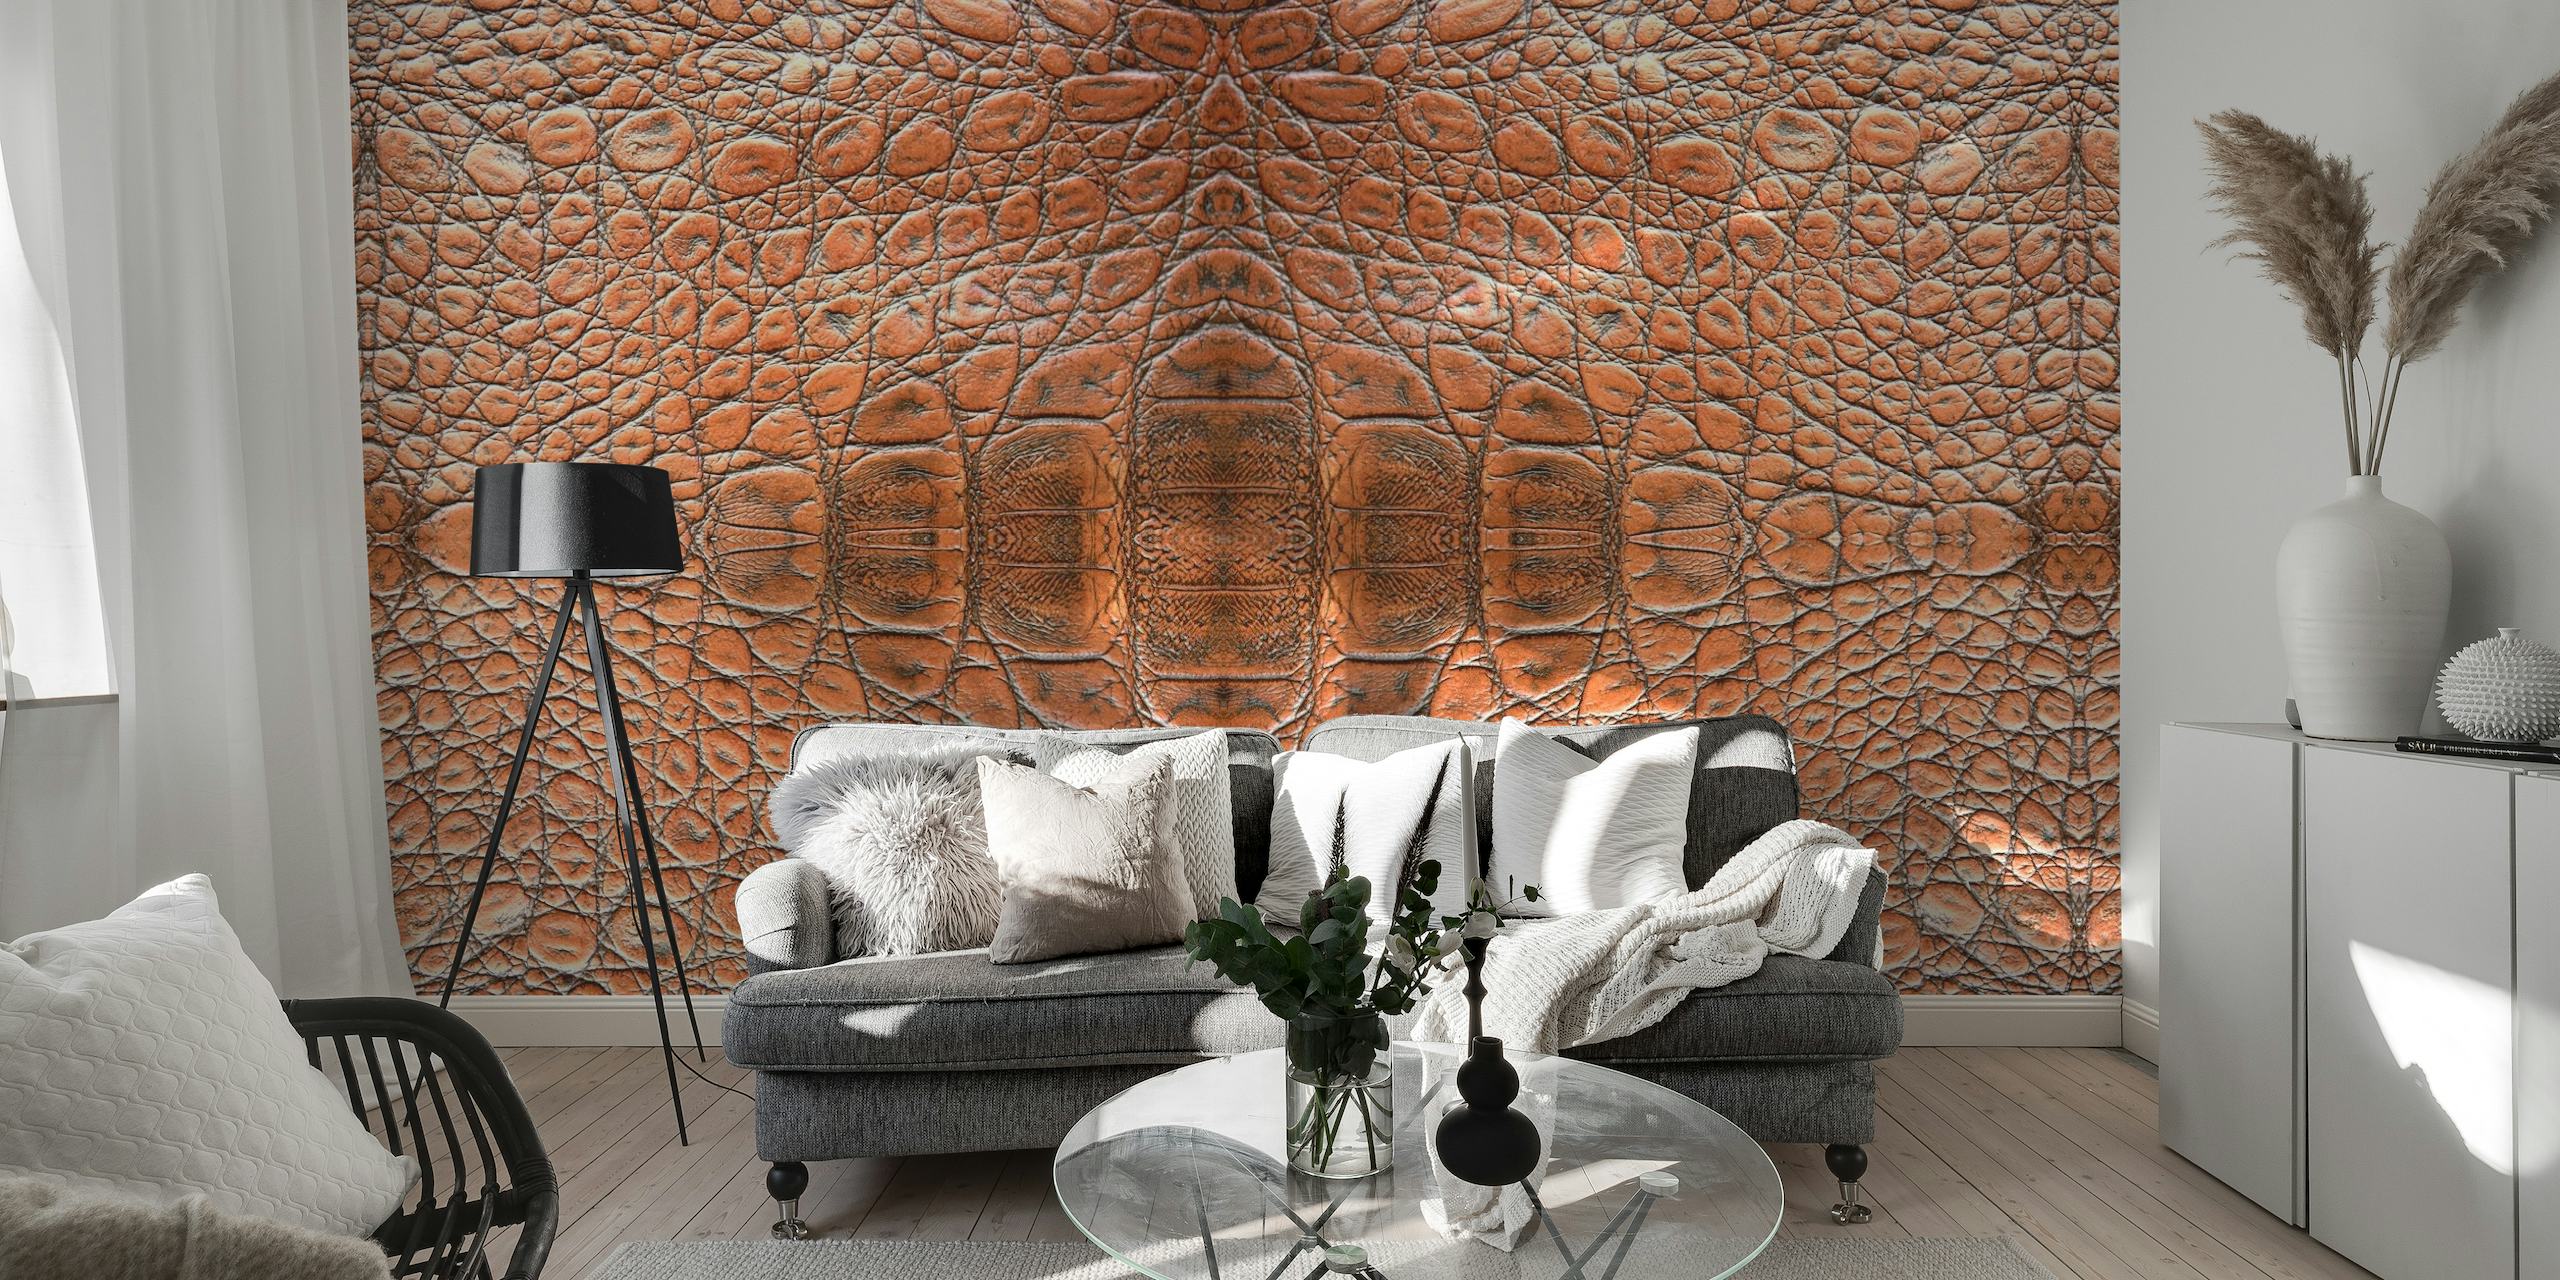 Unique and high-quality textured crocodile wallpaper design